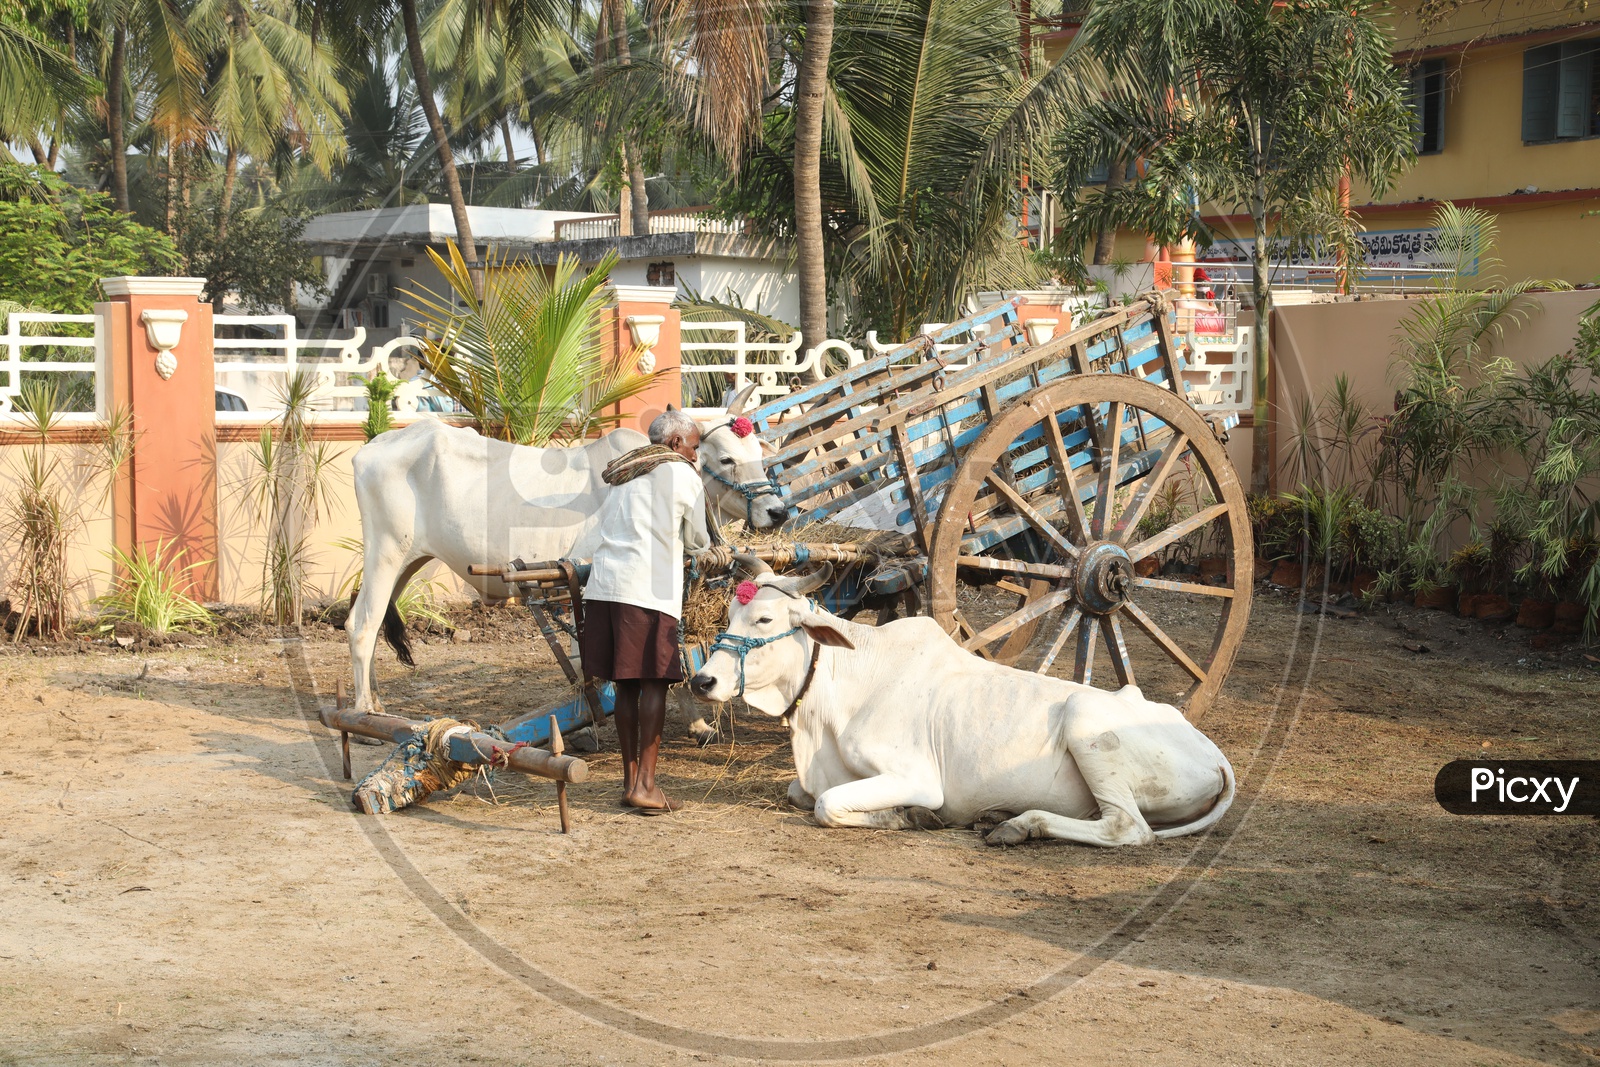 A Farmer With his Bullock Cart